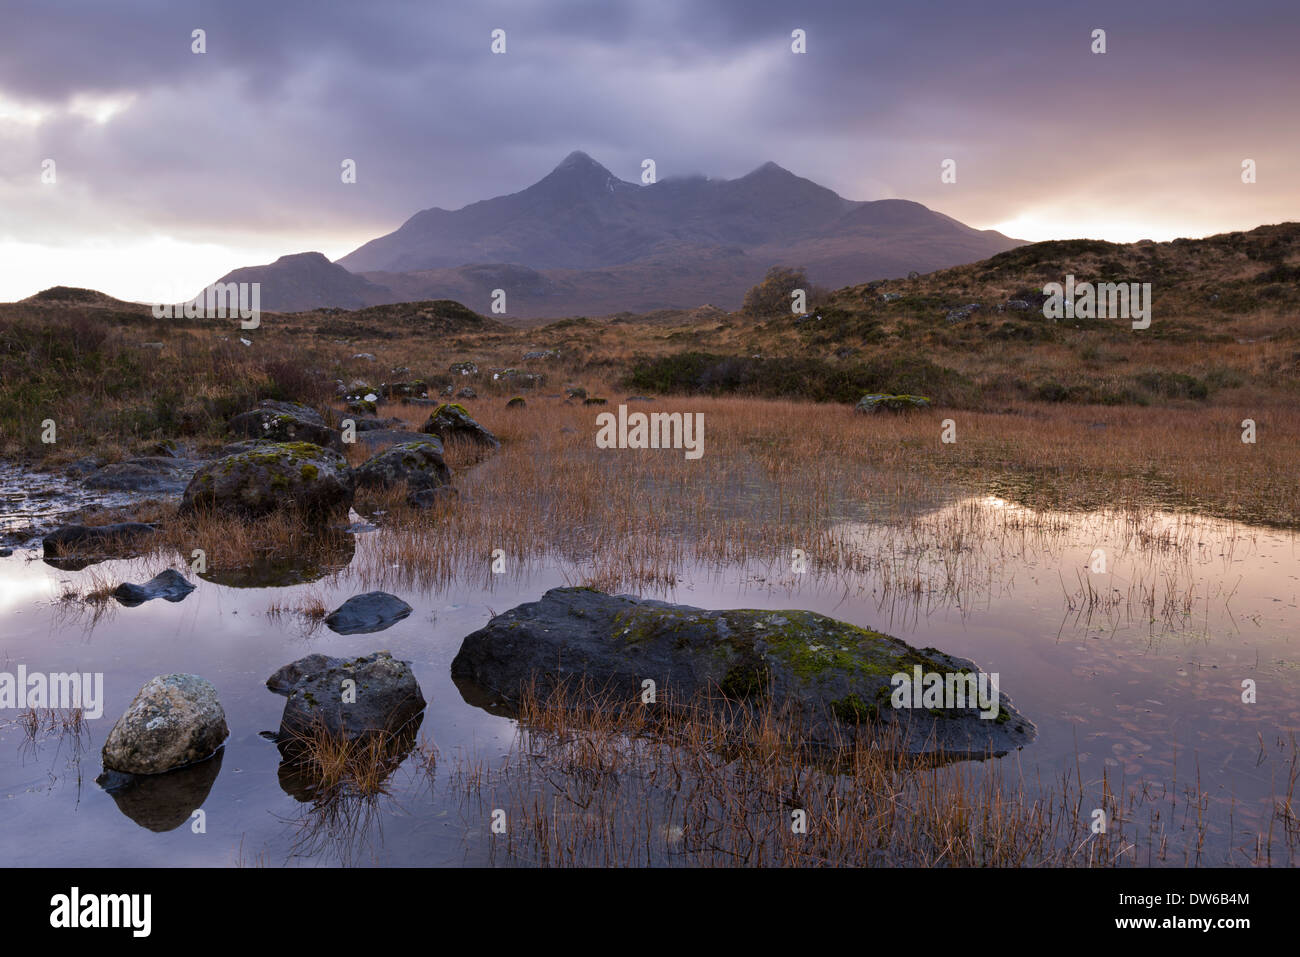 The Cuillin mountains from Glen Sligachan, Isle of Skye, Scotland. Winter (November) 2013. Stock Photo